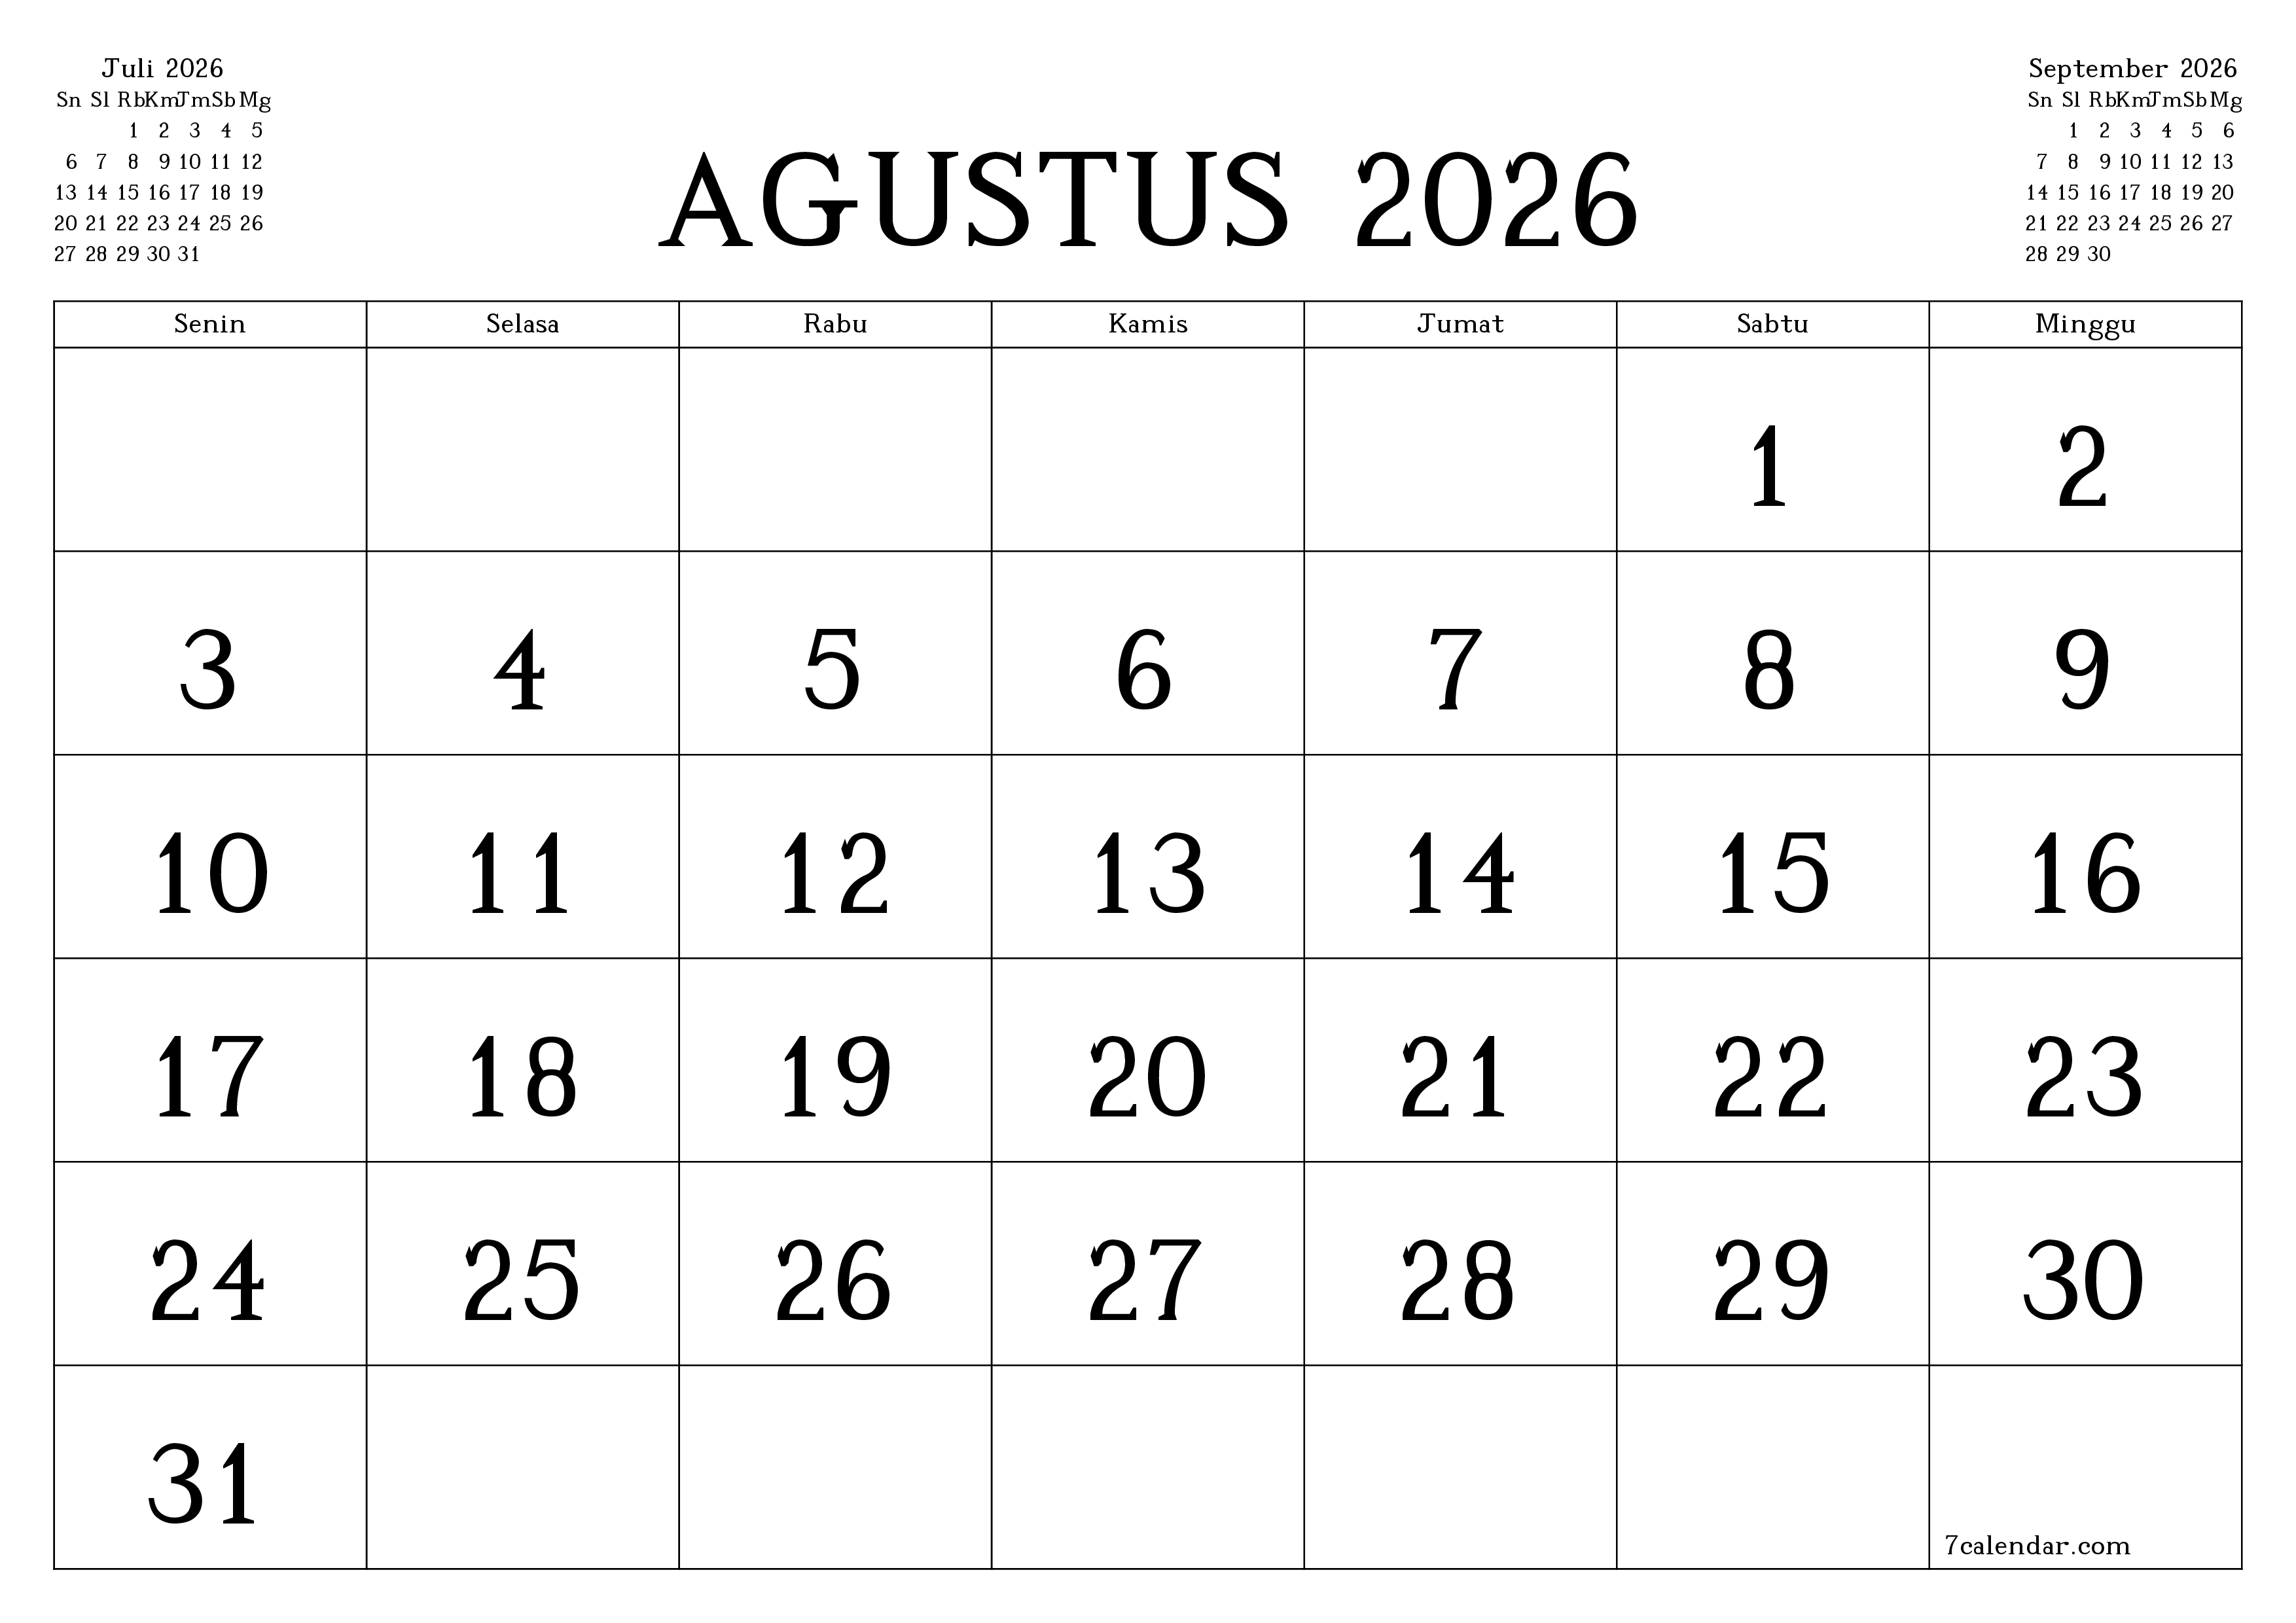  yang dapat dicetak dinding templat gratishorisontal Bulanan kalender Agustus (Agt) 2026